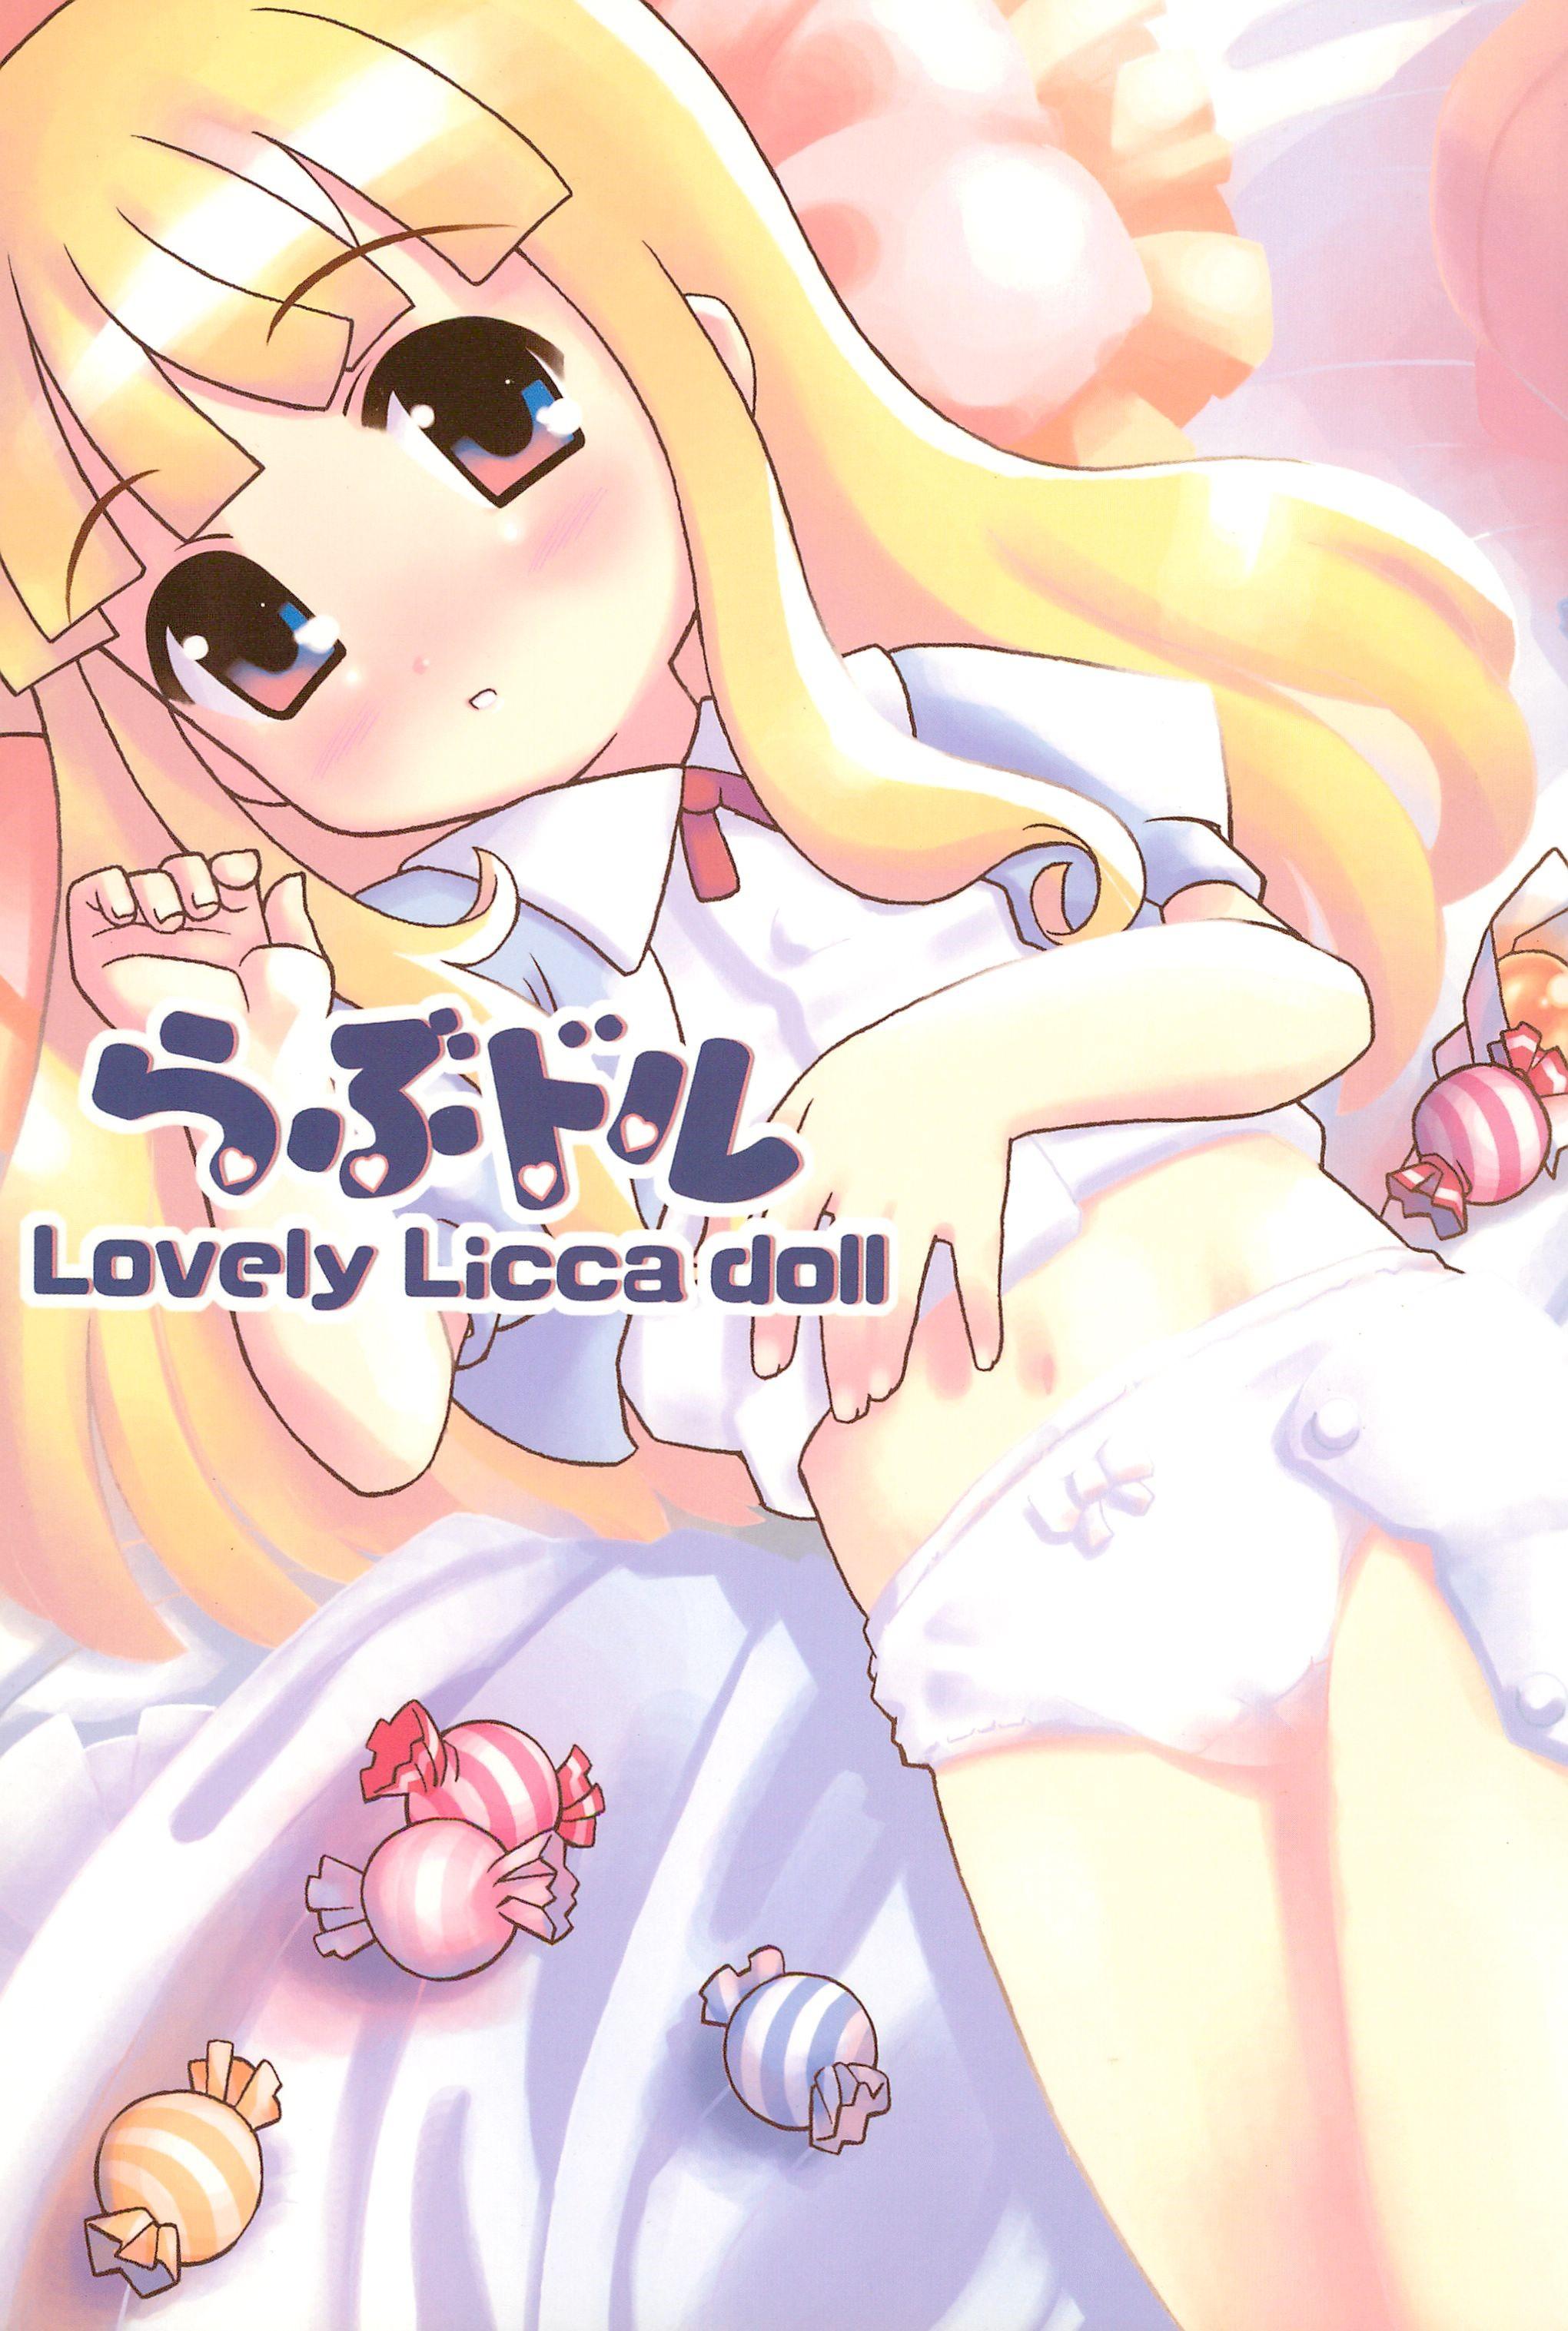 Cock Love Doll - Super doll licca-chan Licca vignette Closeups - Picture 1